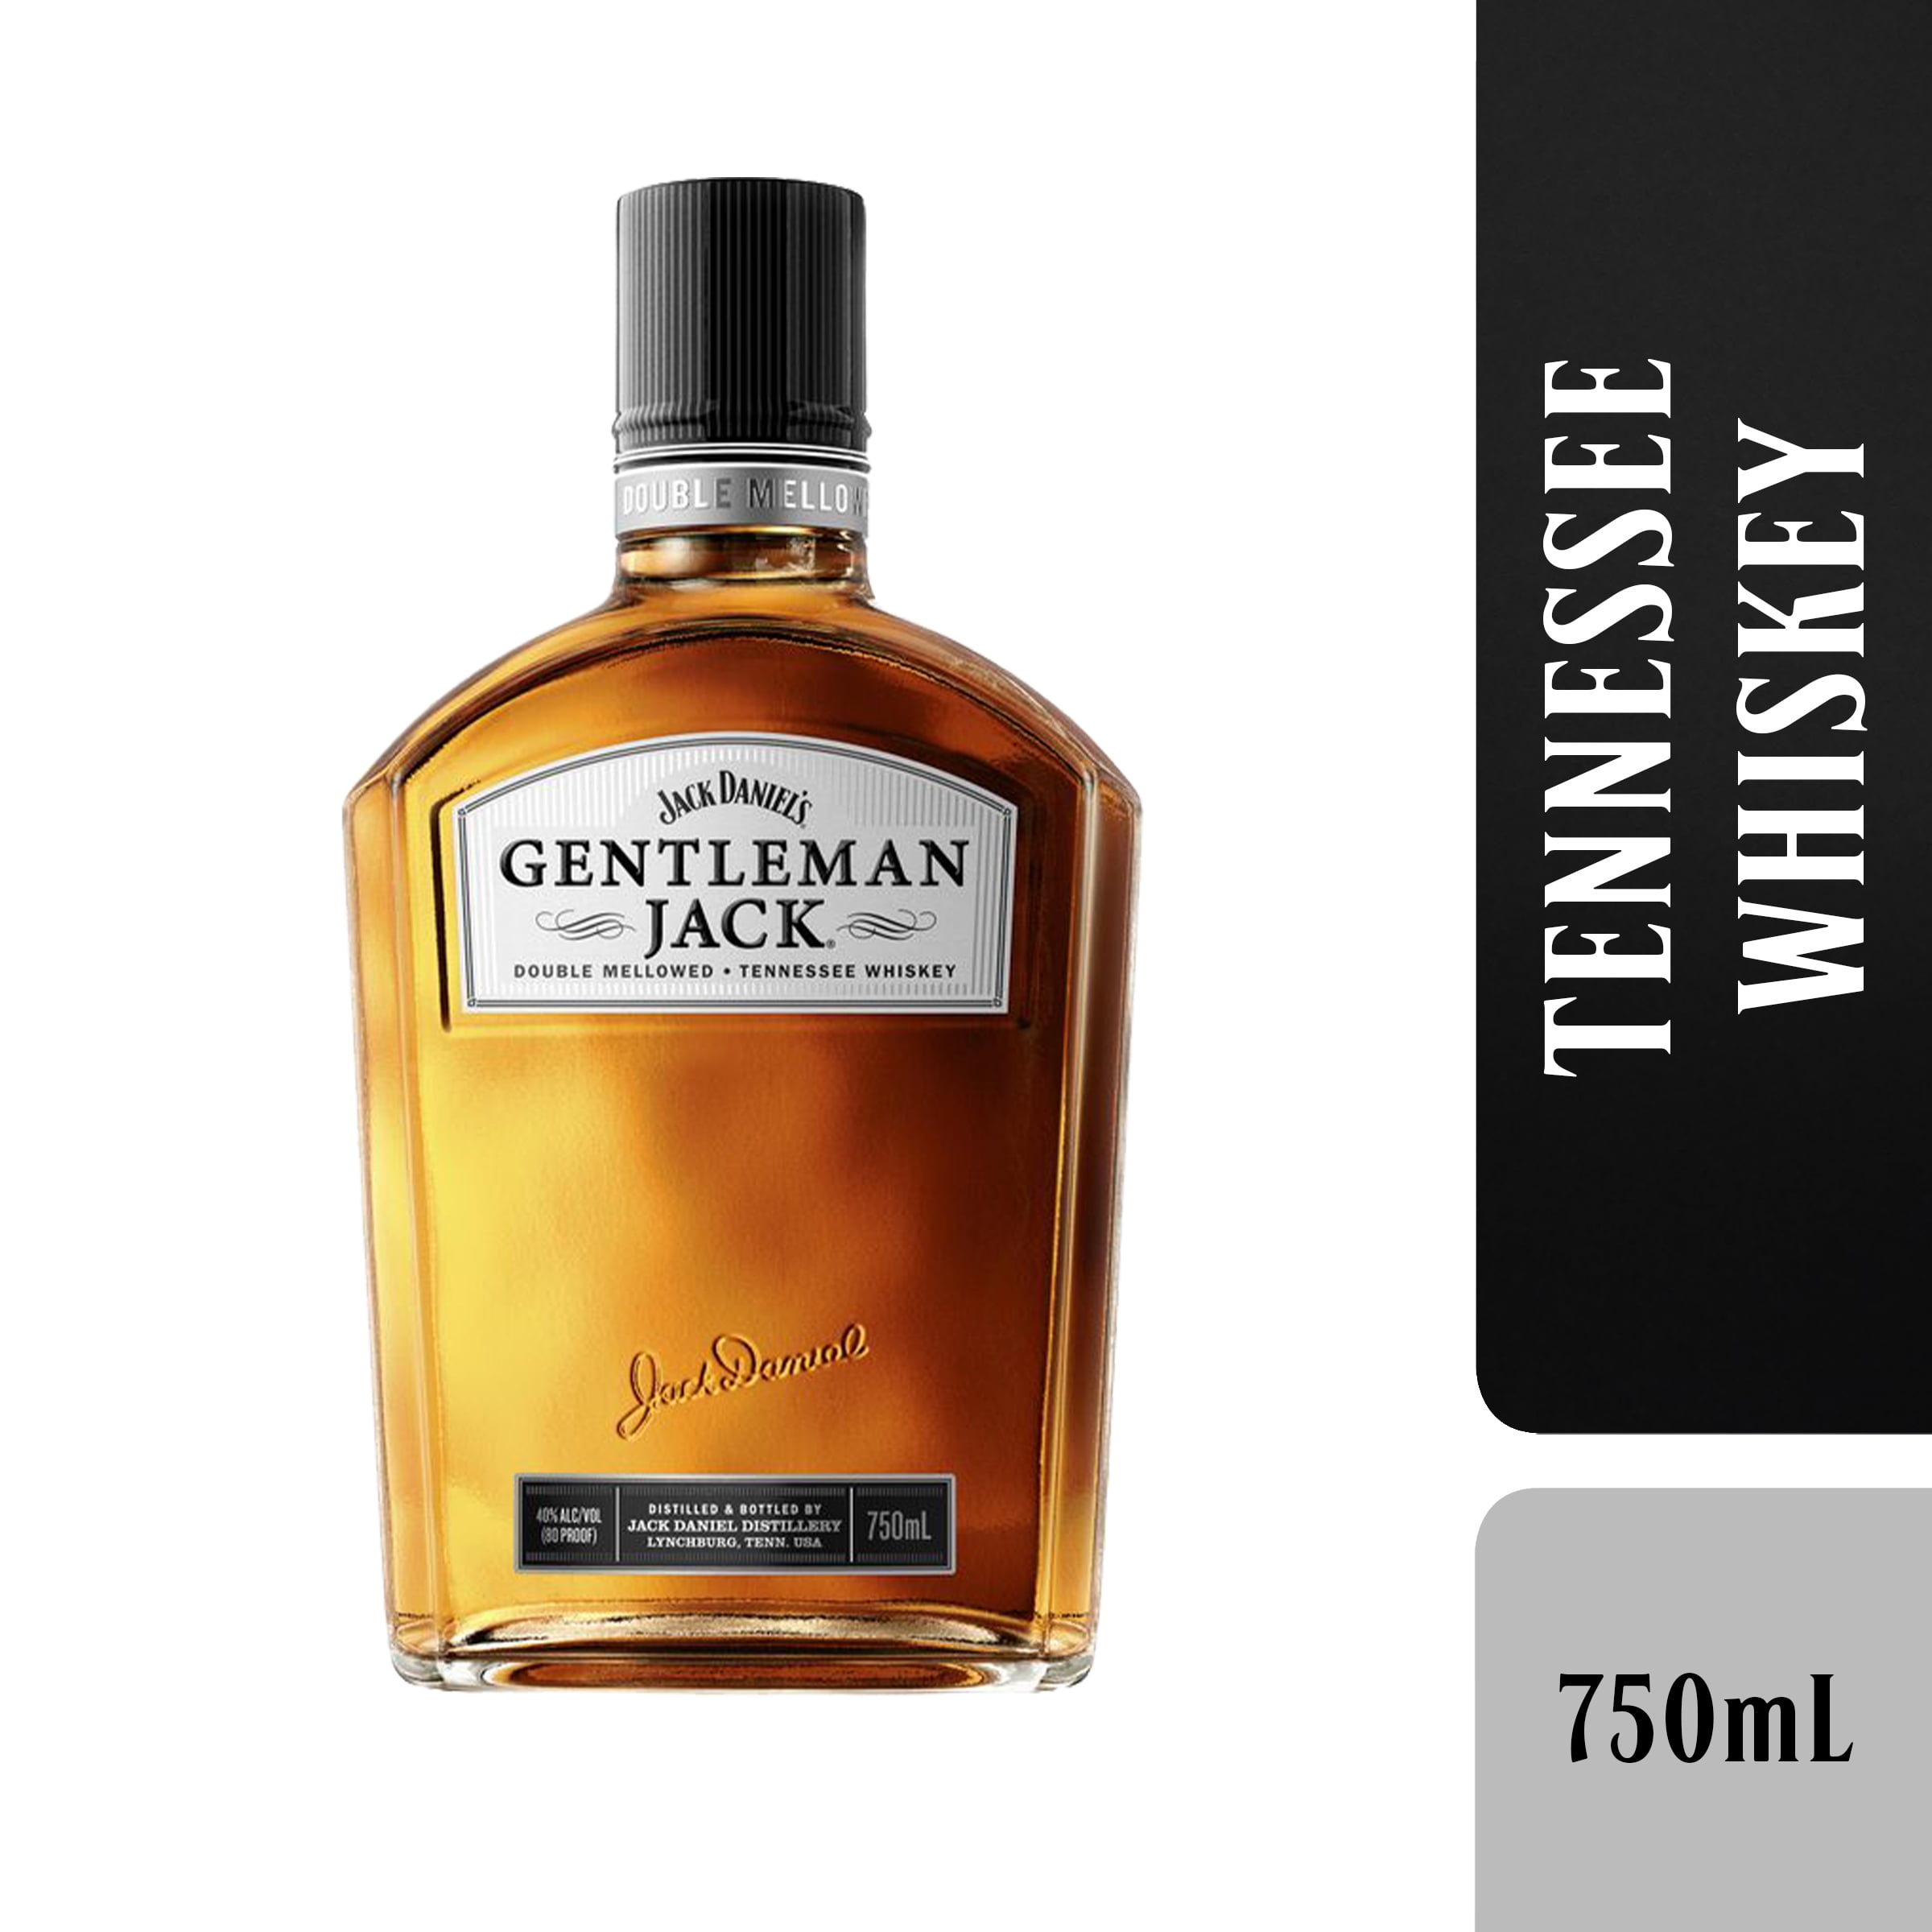 Jack Daniel's Gentleman Jack Tennessee Whiskey, 750 mL Bottle - Walmart.com